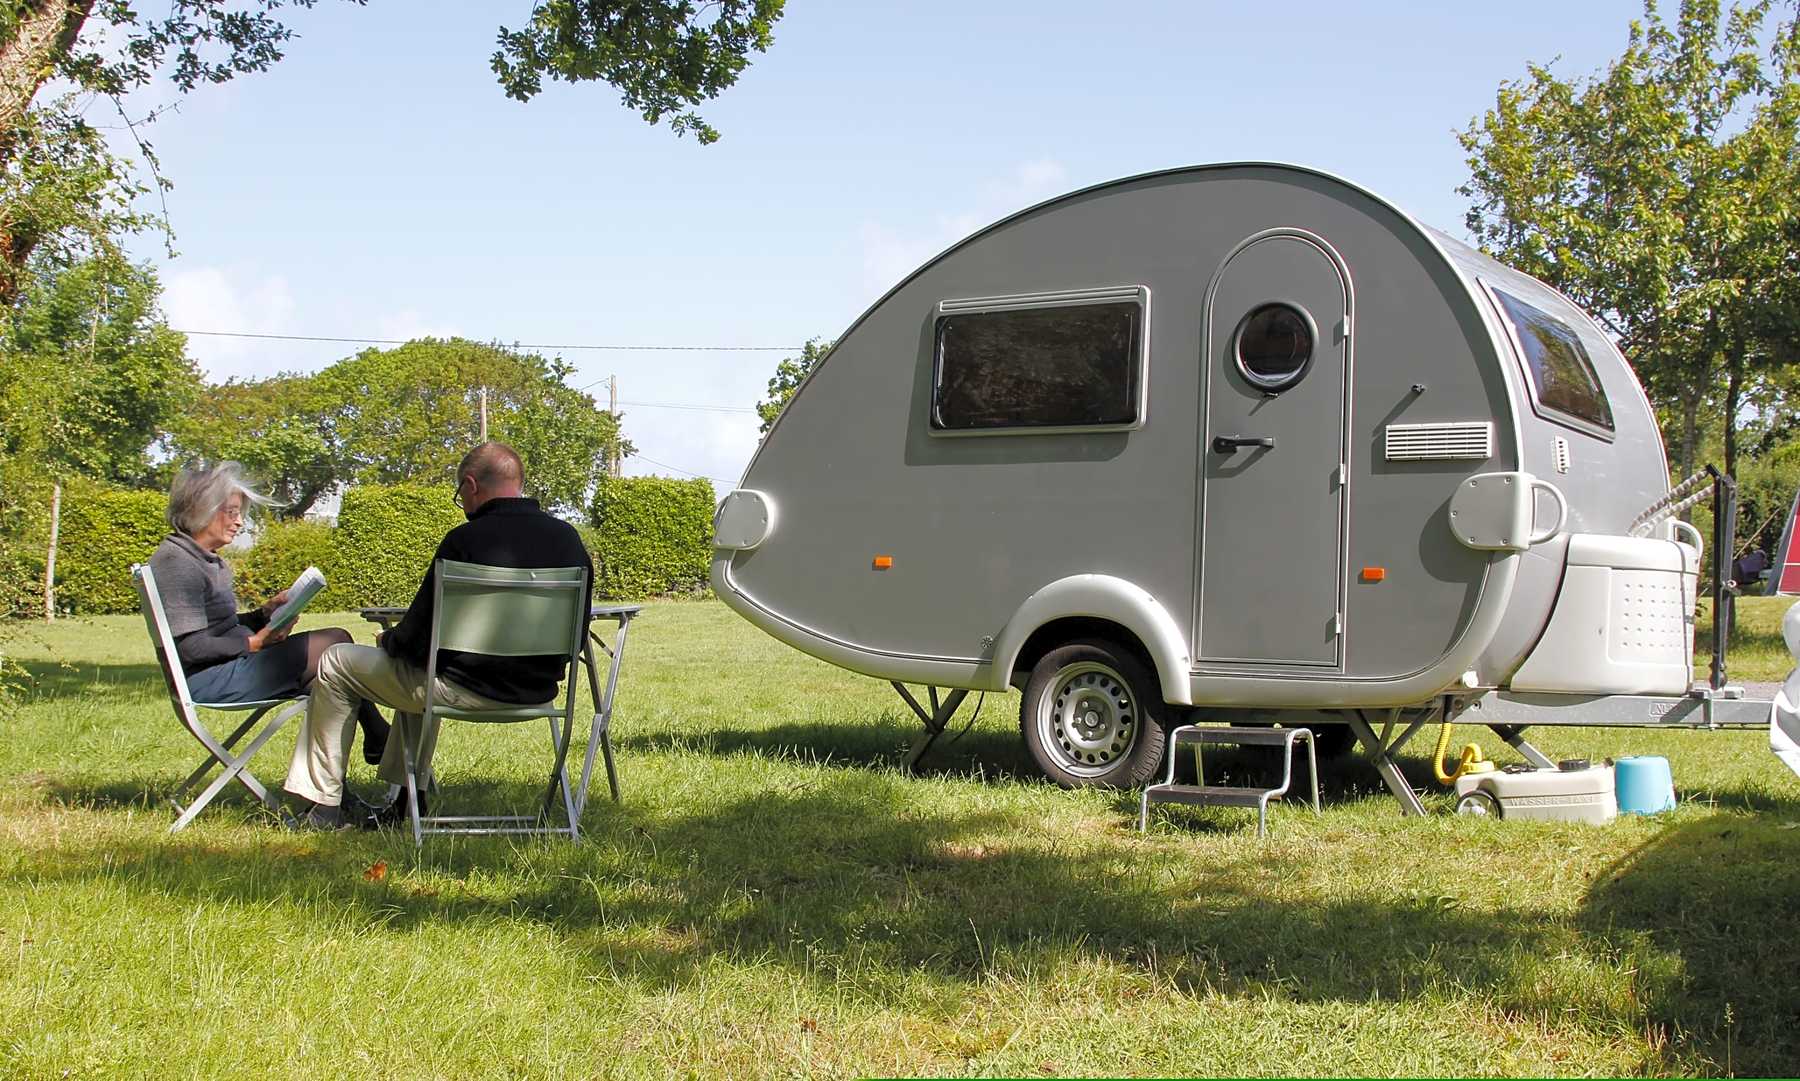 A teardrop trailer on a campsite in France